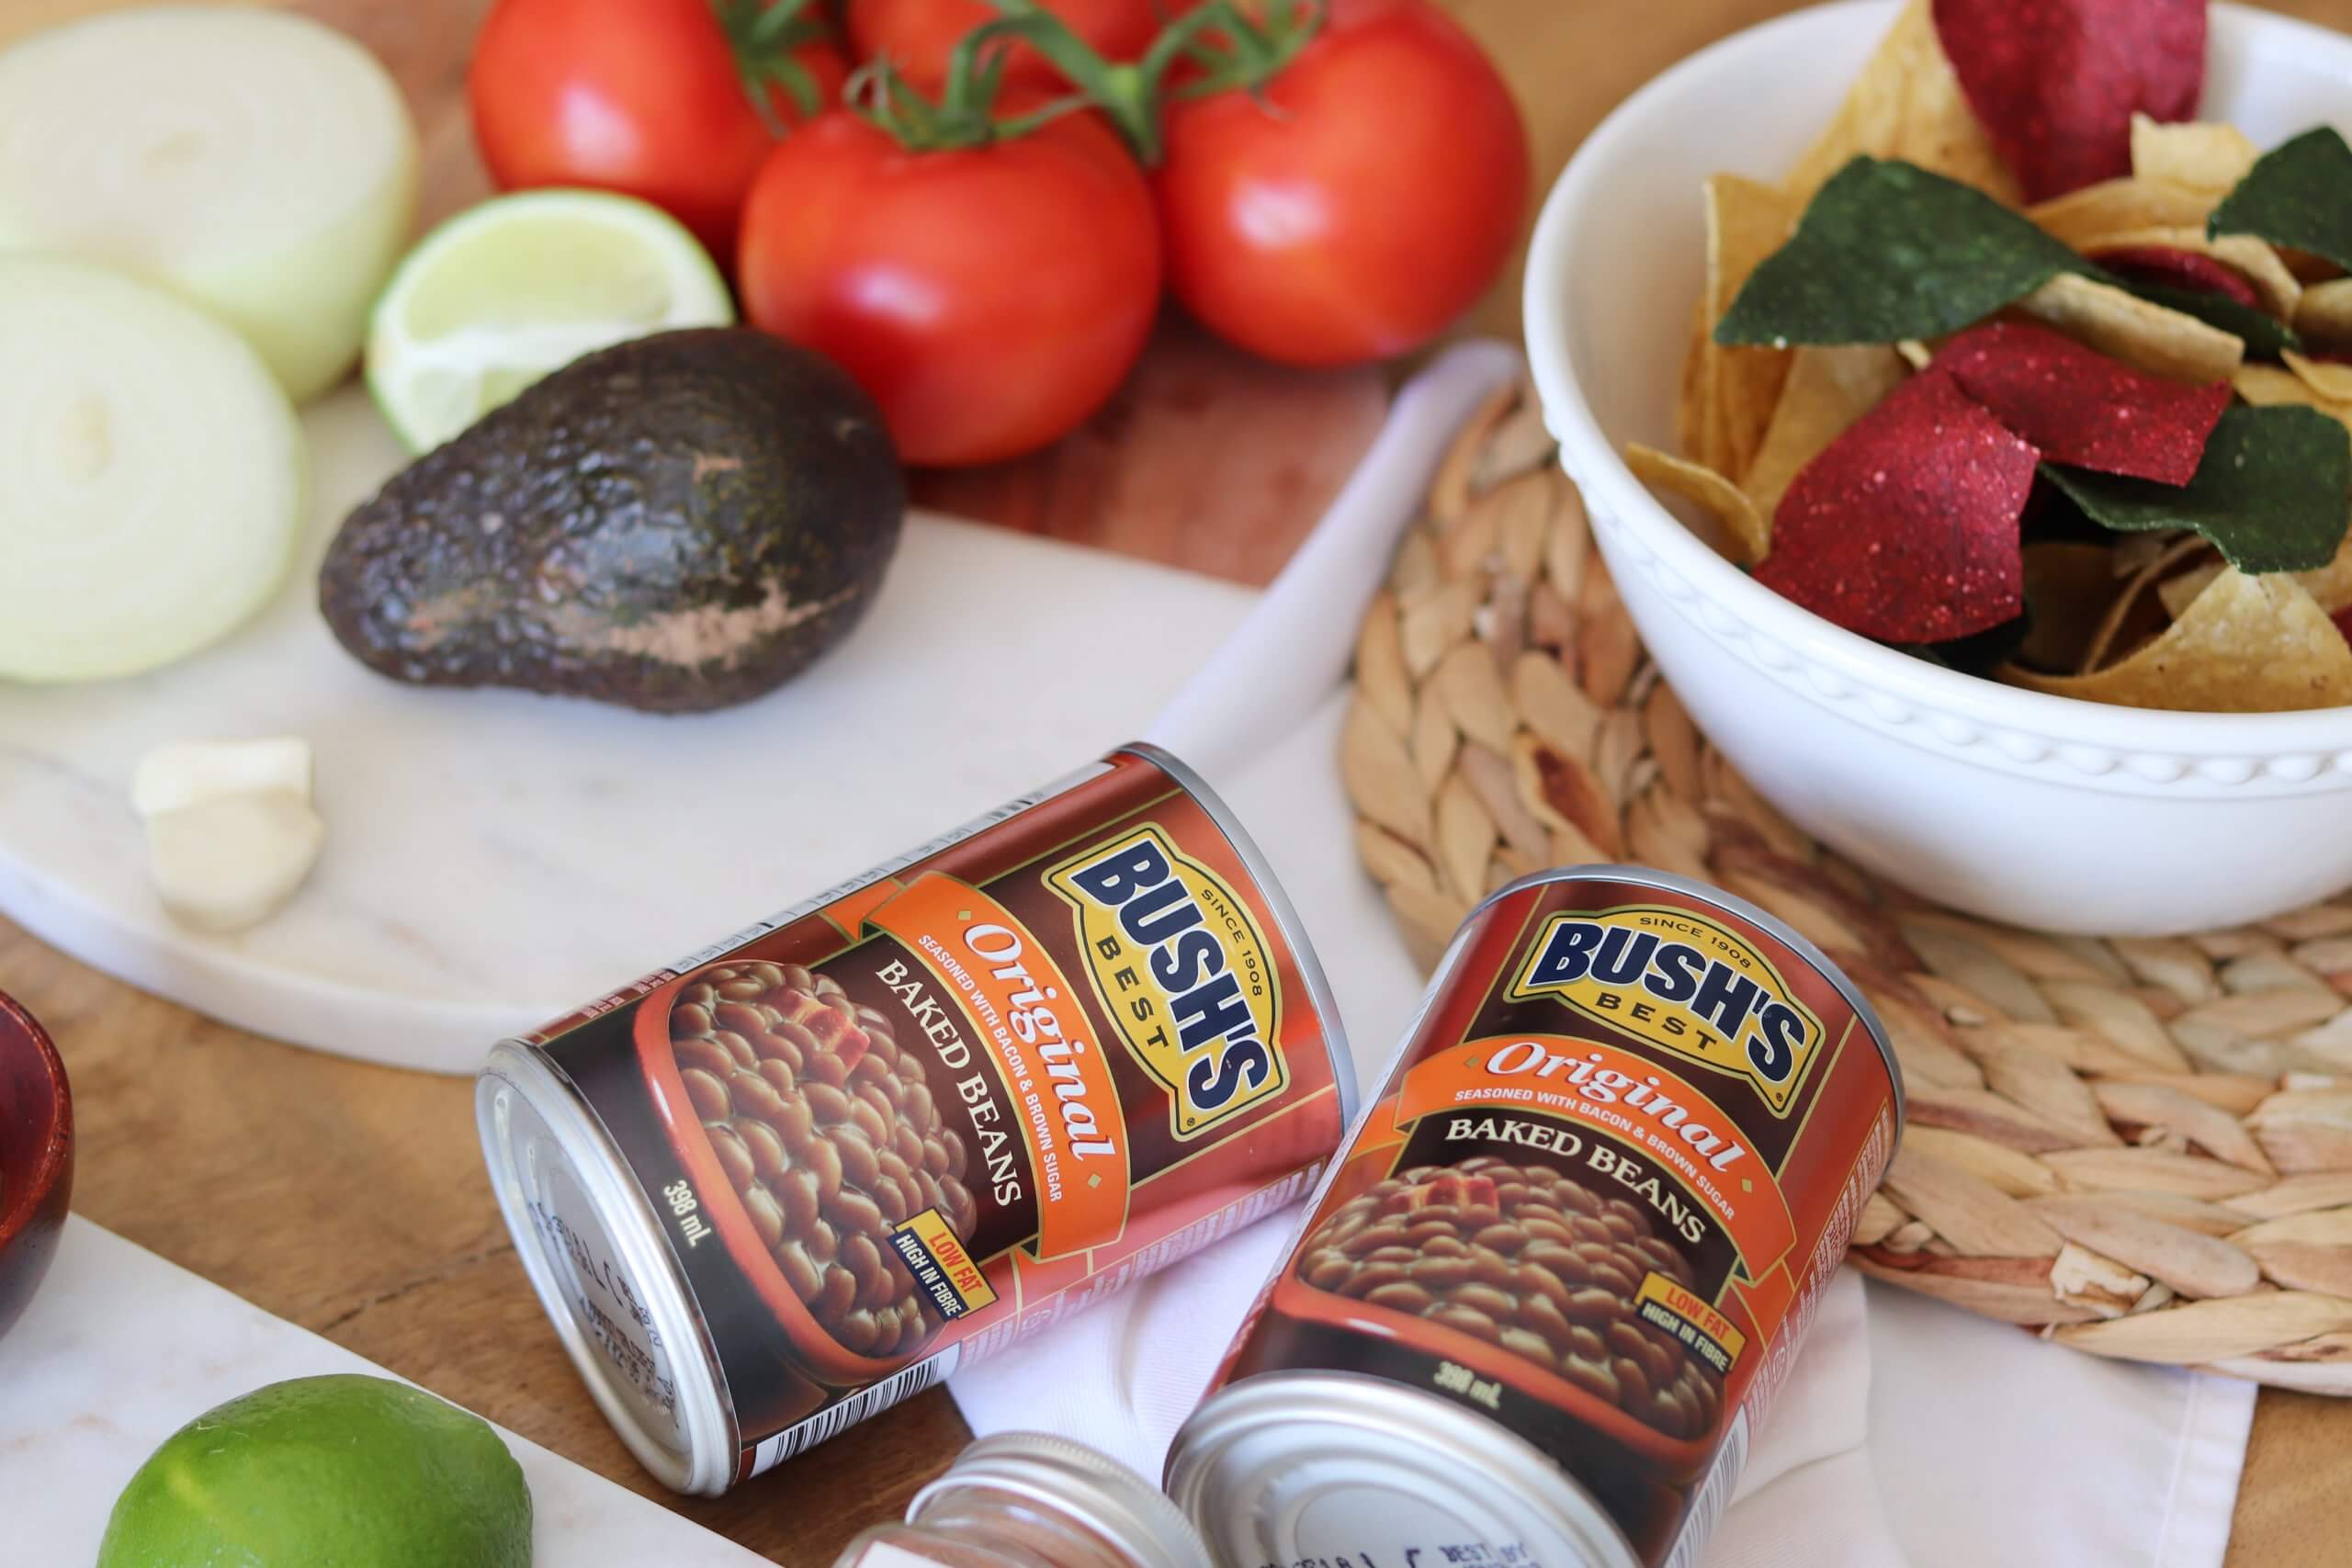 Mexican Bean Bake Starring Bush’s® Original Baked Beans!